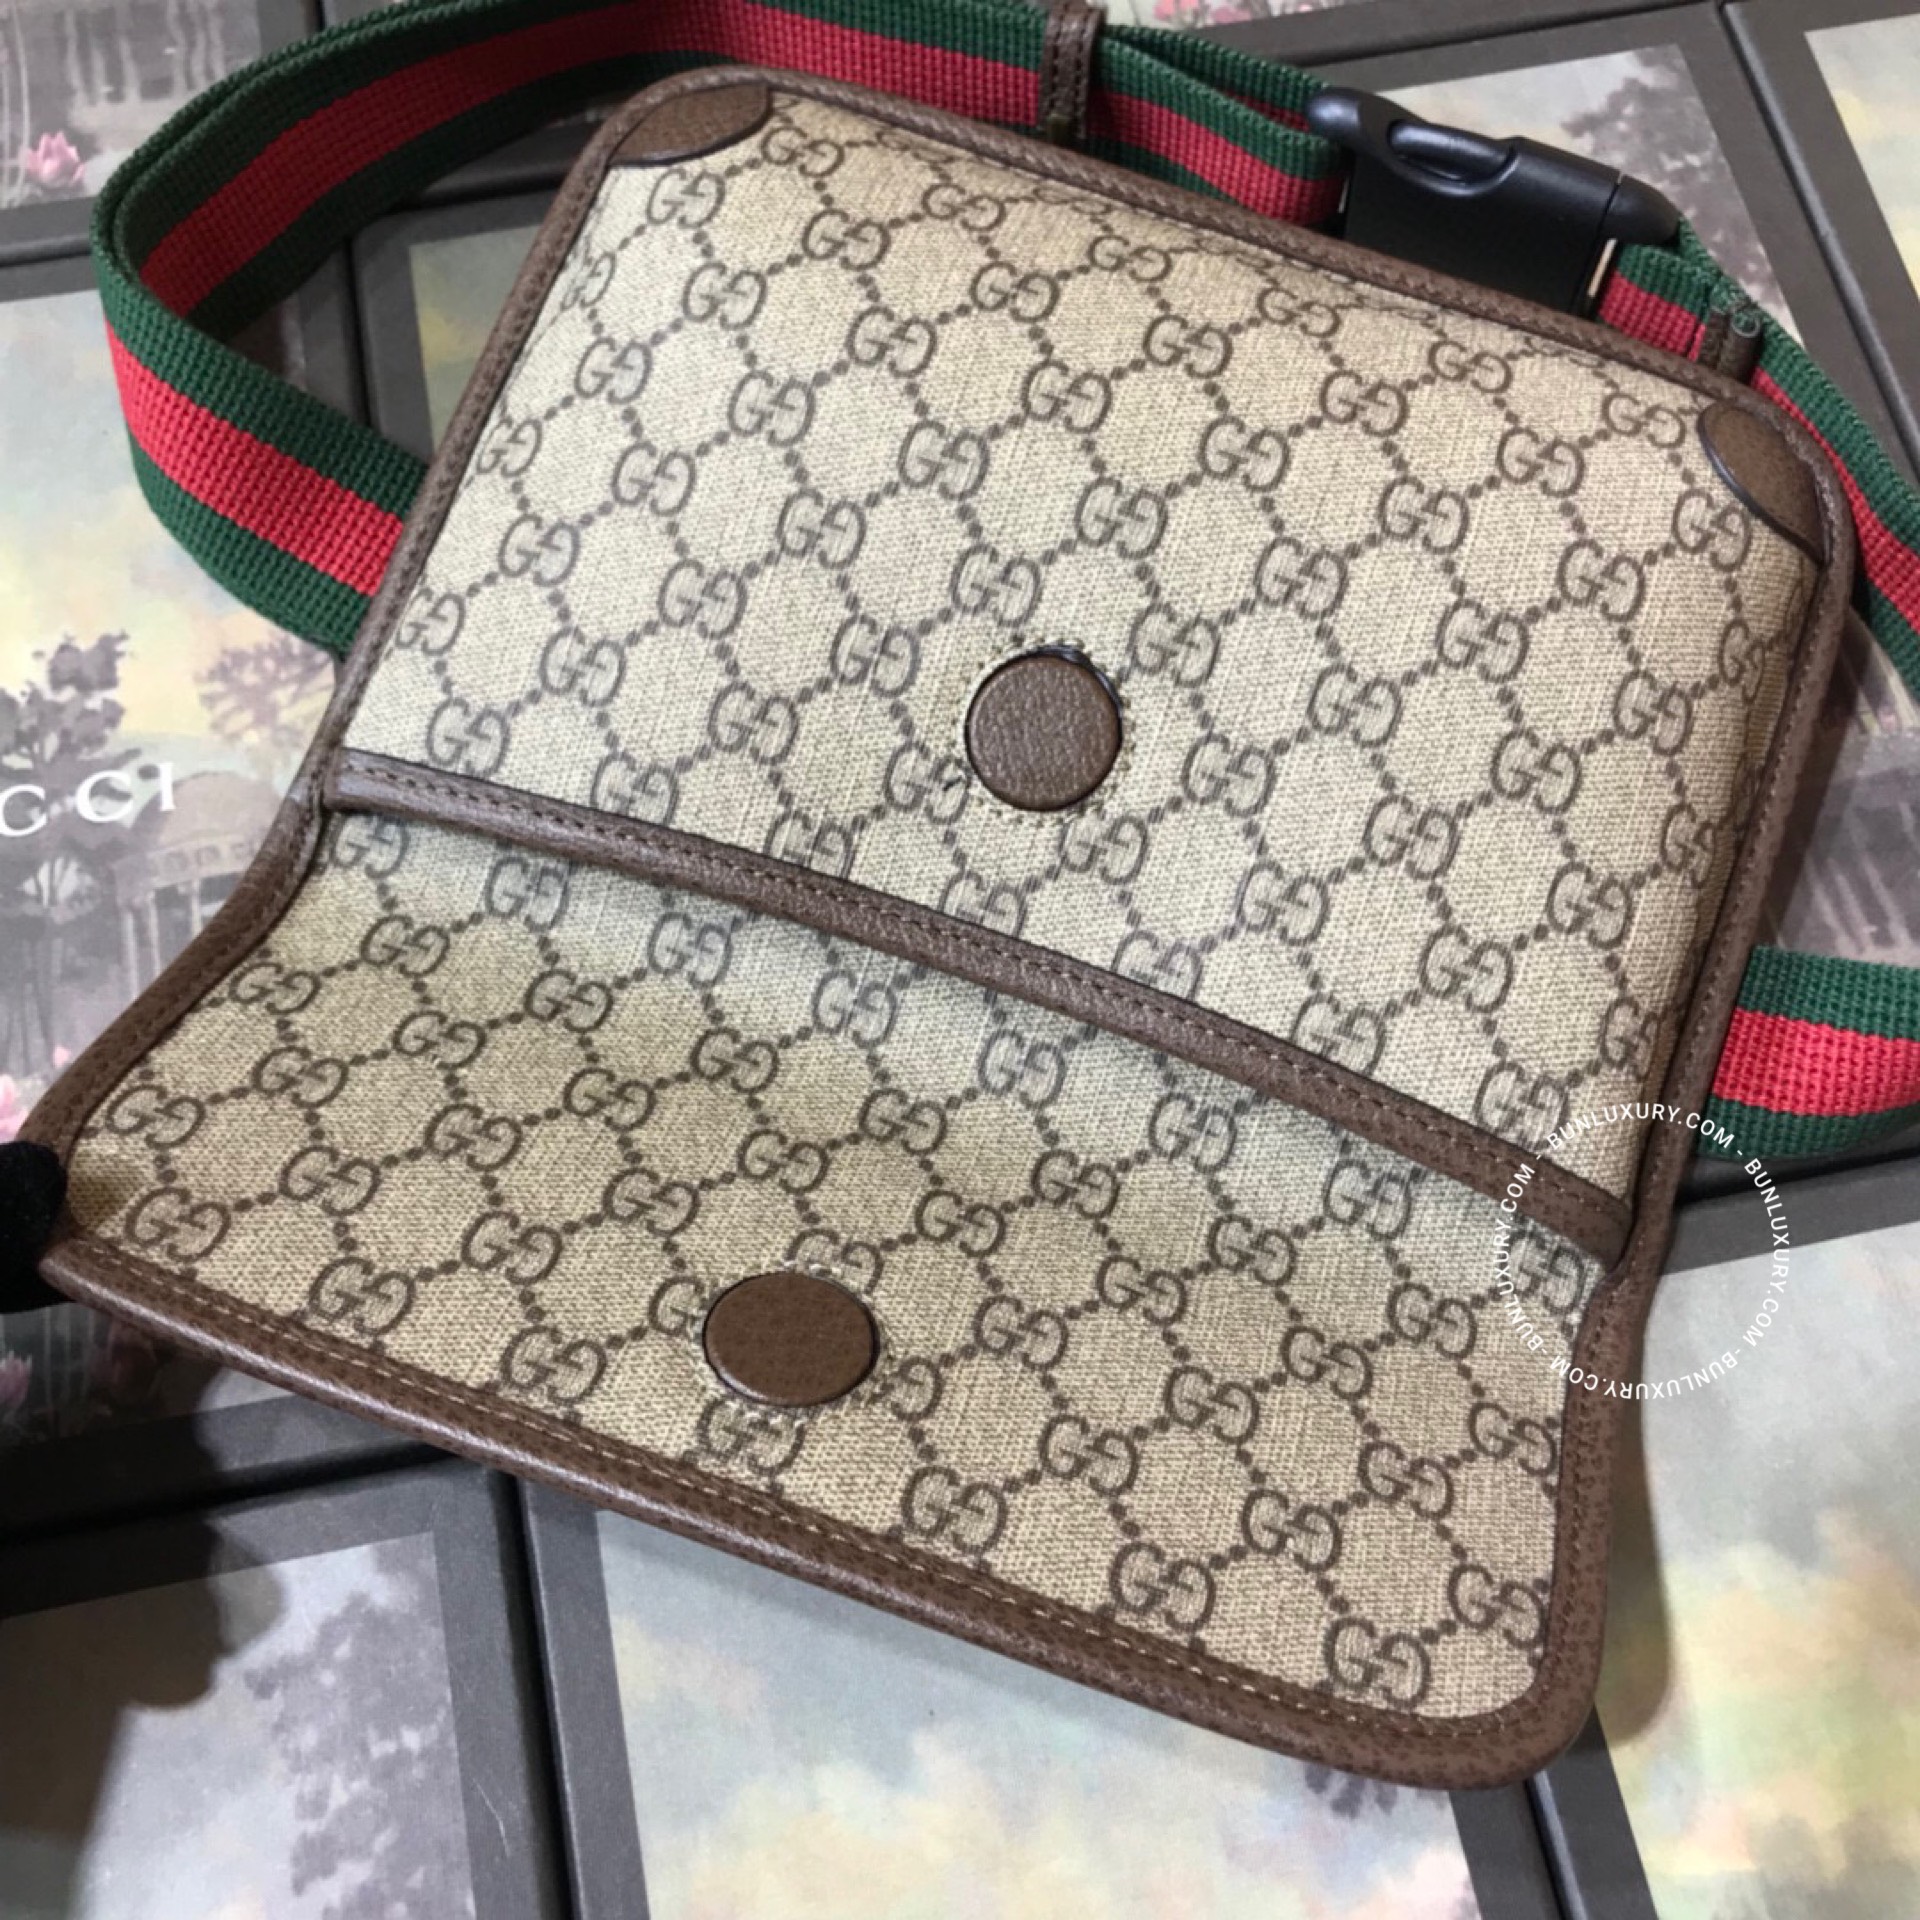 Túi Xách Gucci Neo Vintage GG Supreme Belt Bag 493930